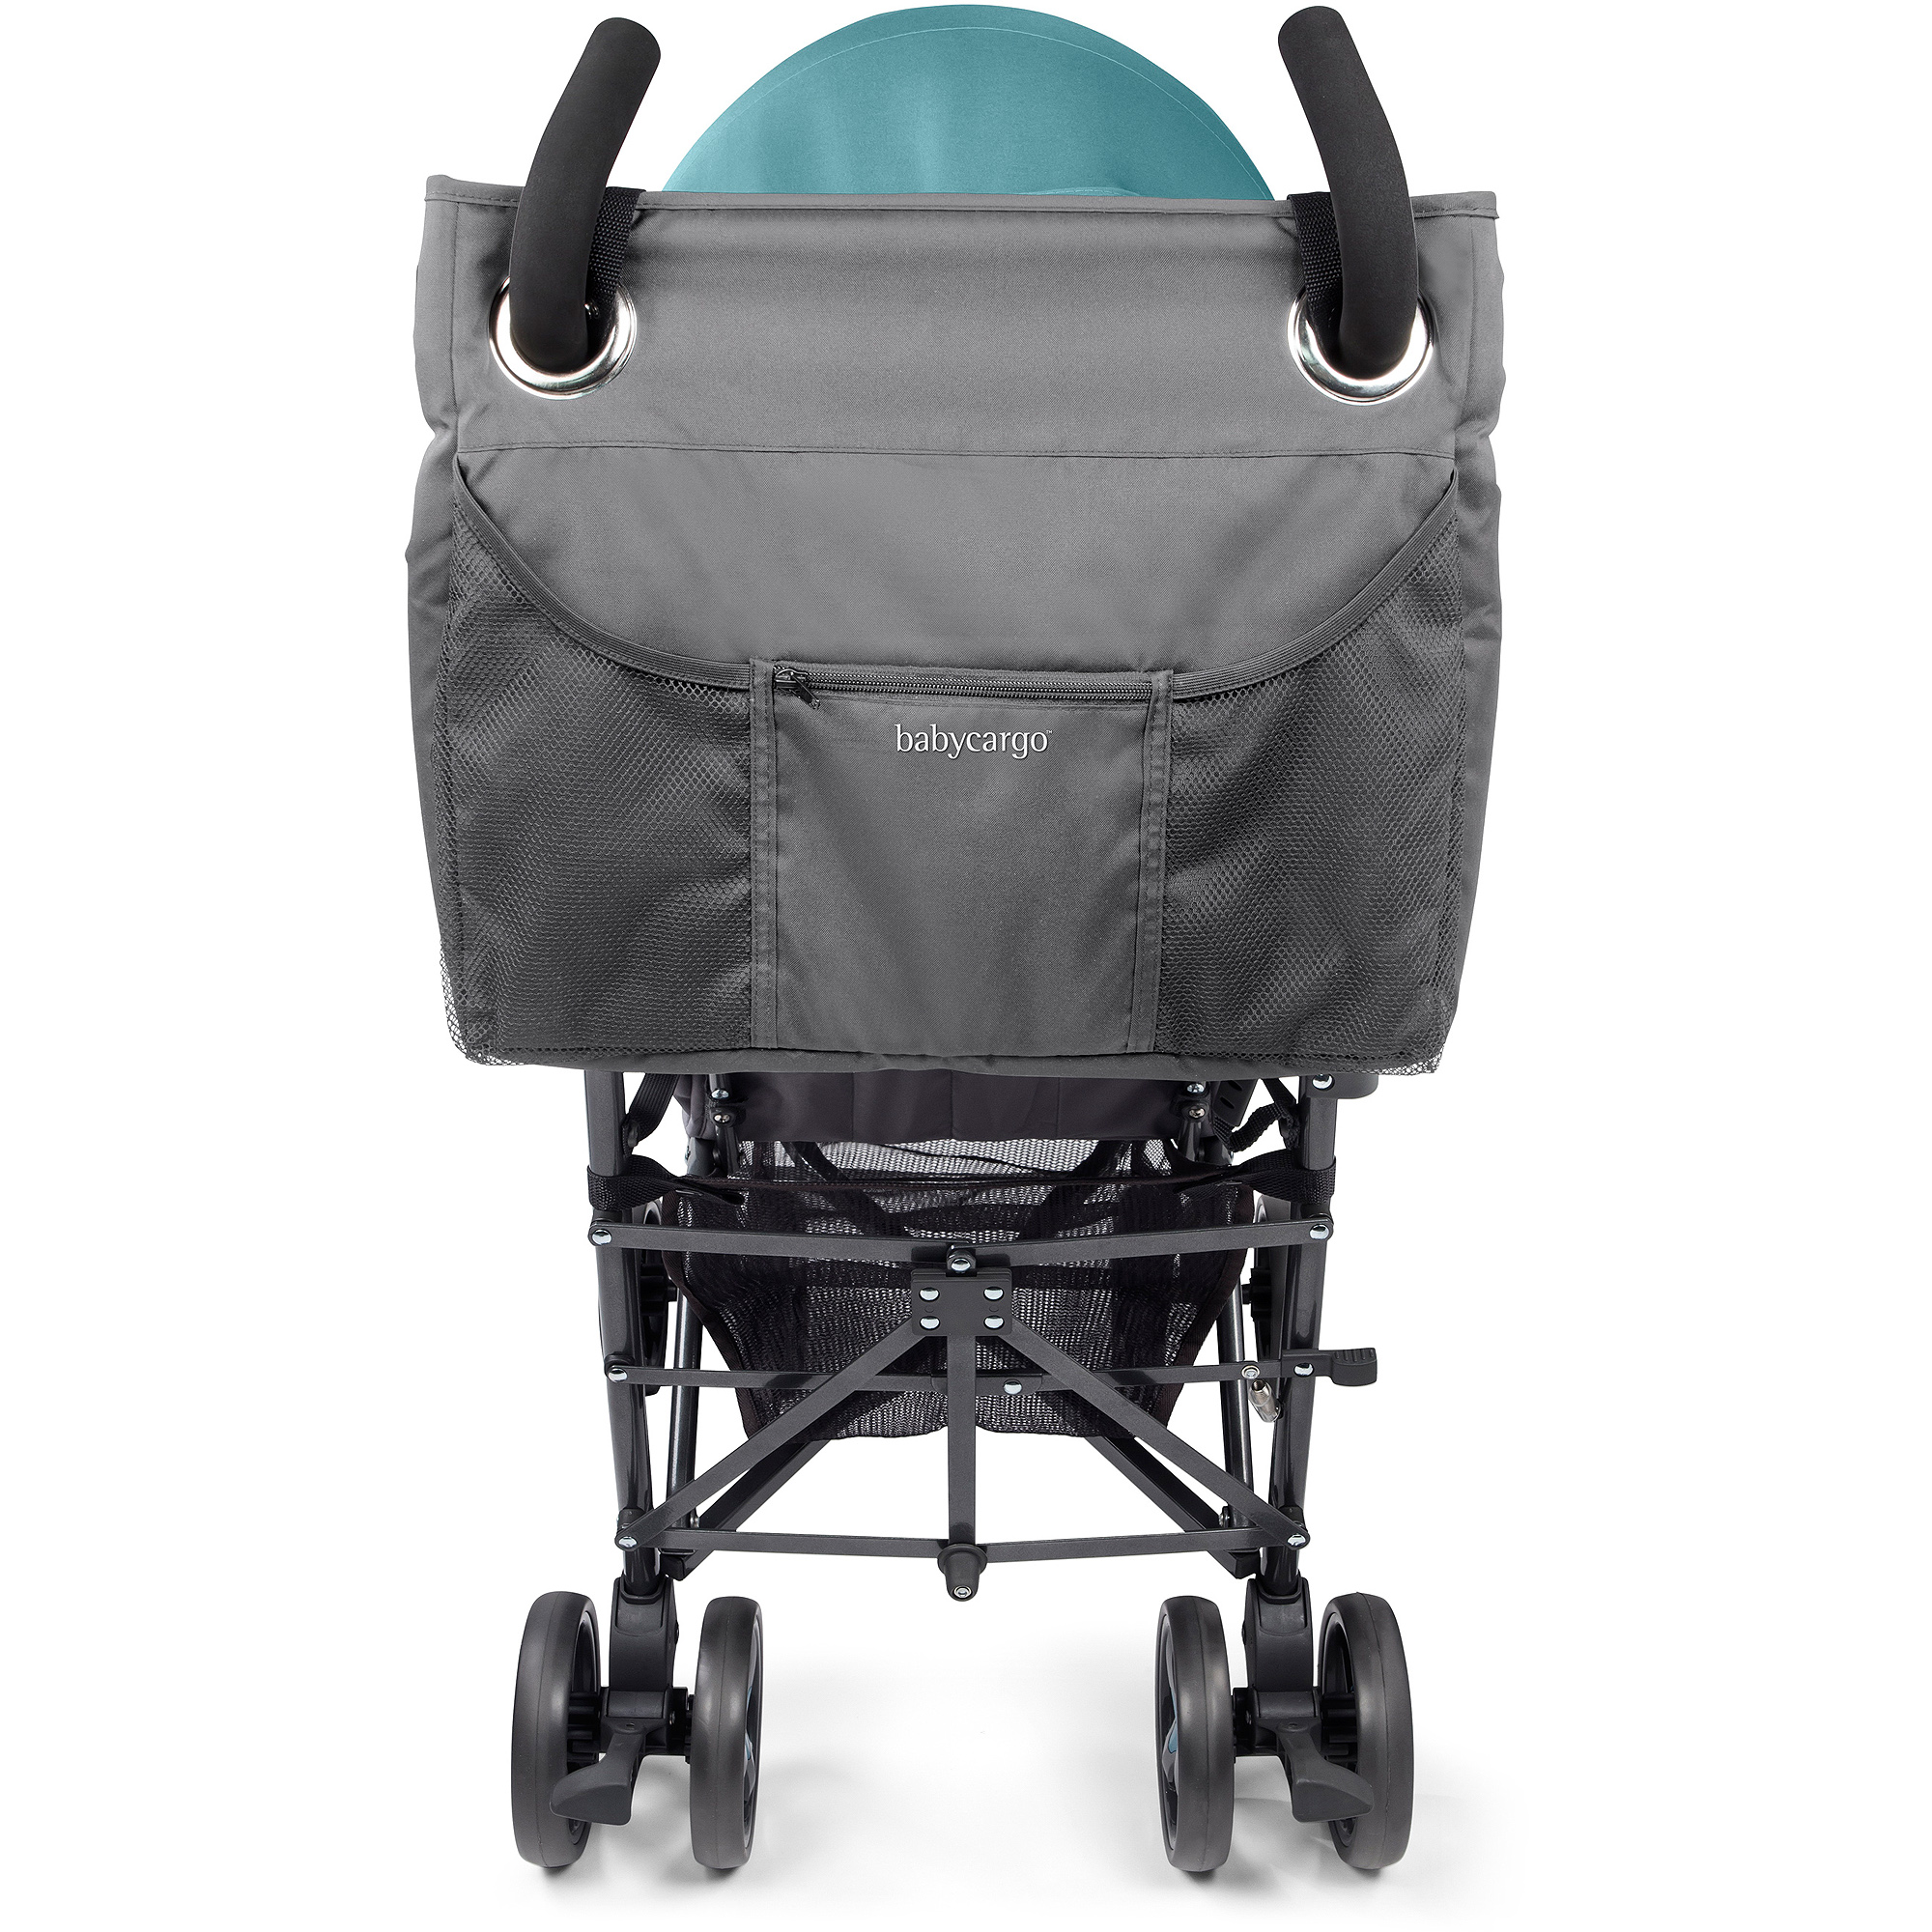 Baby Cargo Series 50 Bundle Stroller and BONUS Diaper Bag; Charcoal/Teal - image 2 of 7